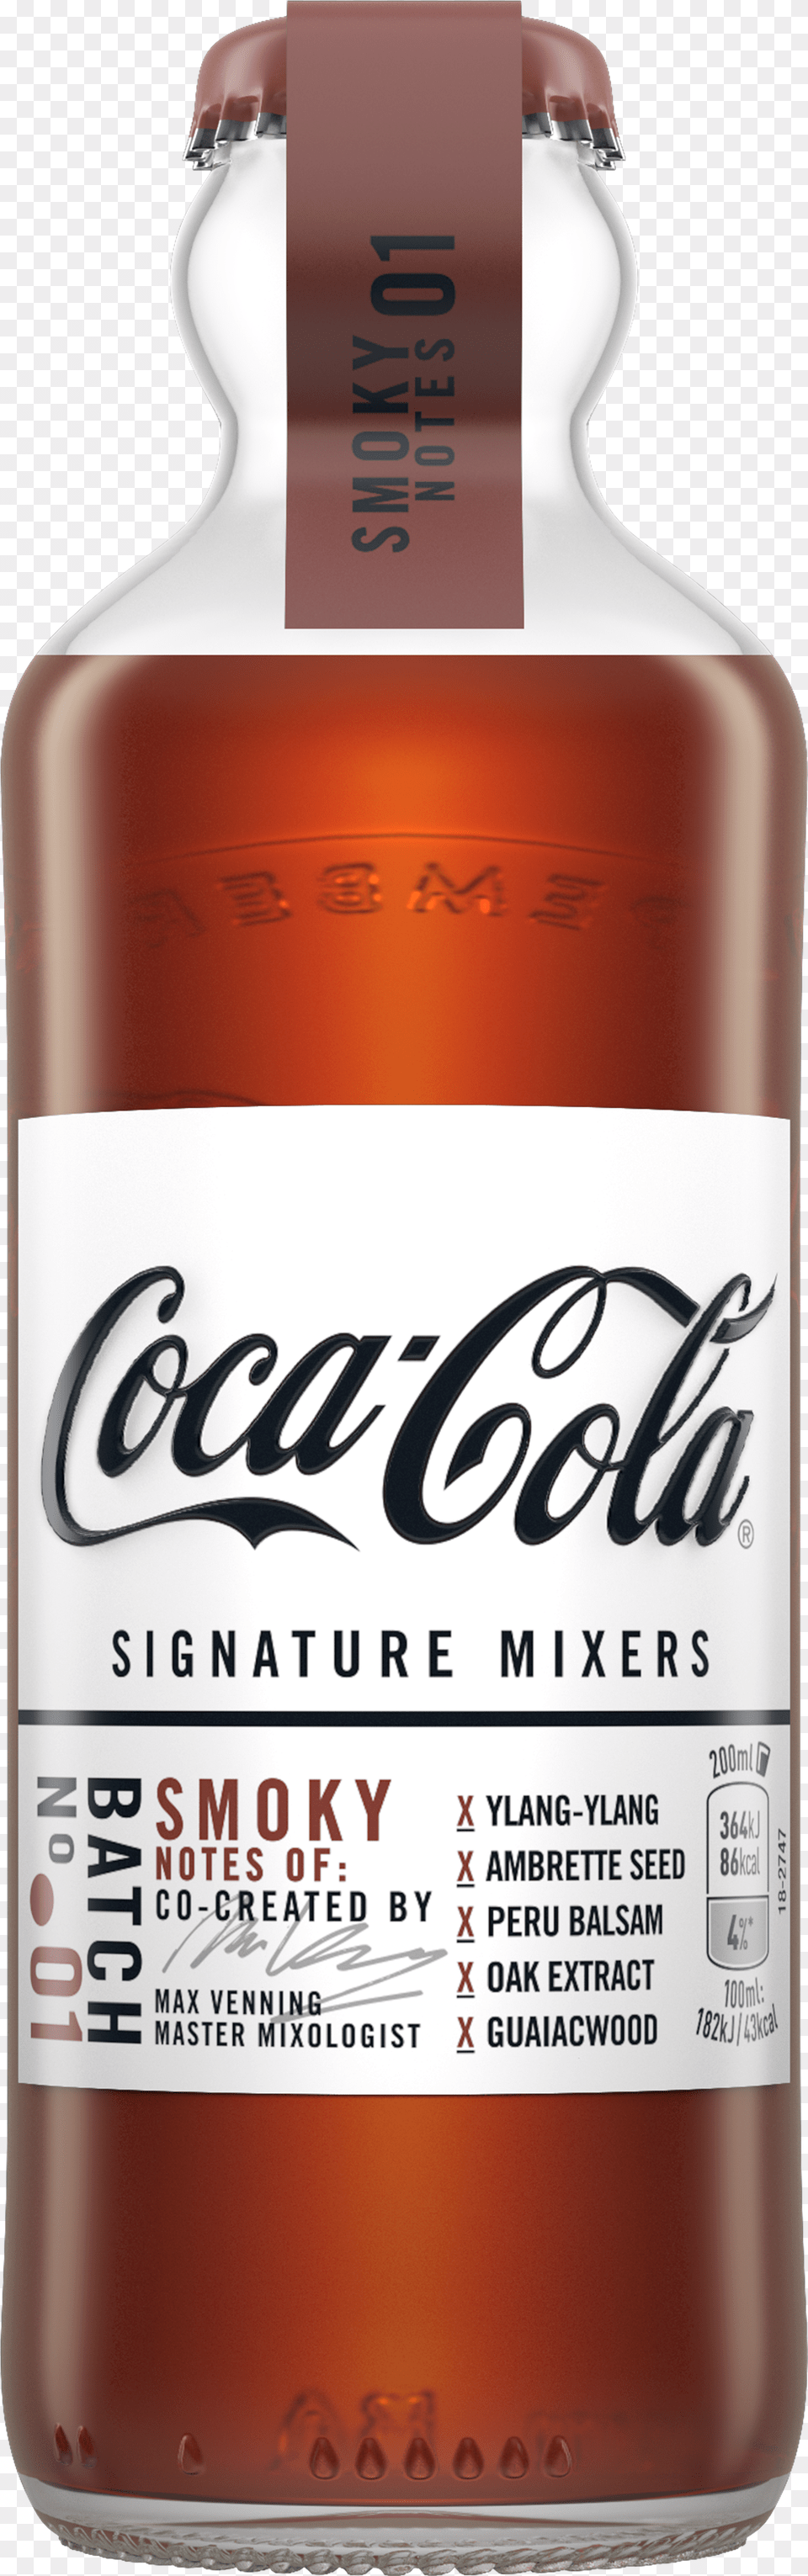 Coca Cola Has Four Varieties Of Its New Mixers One Coca Cola Signature Mixers Woody Png